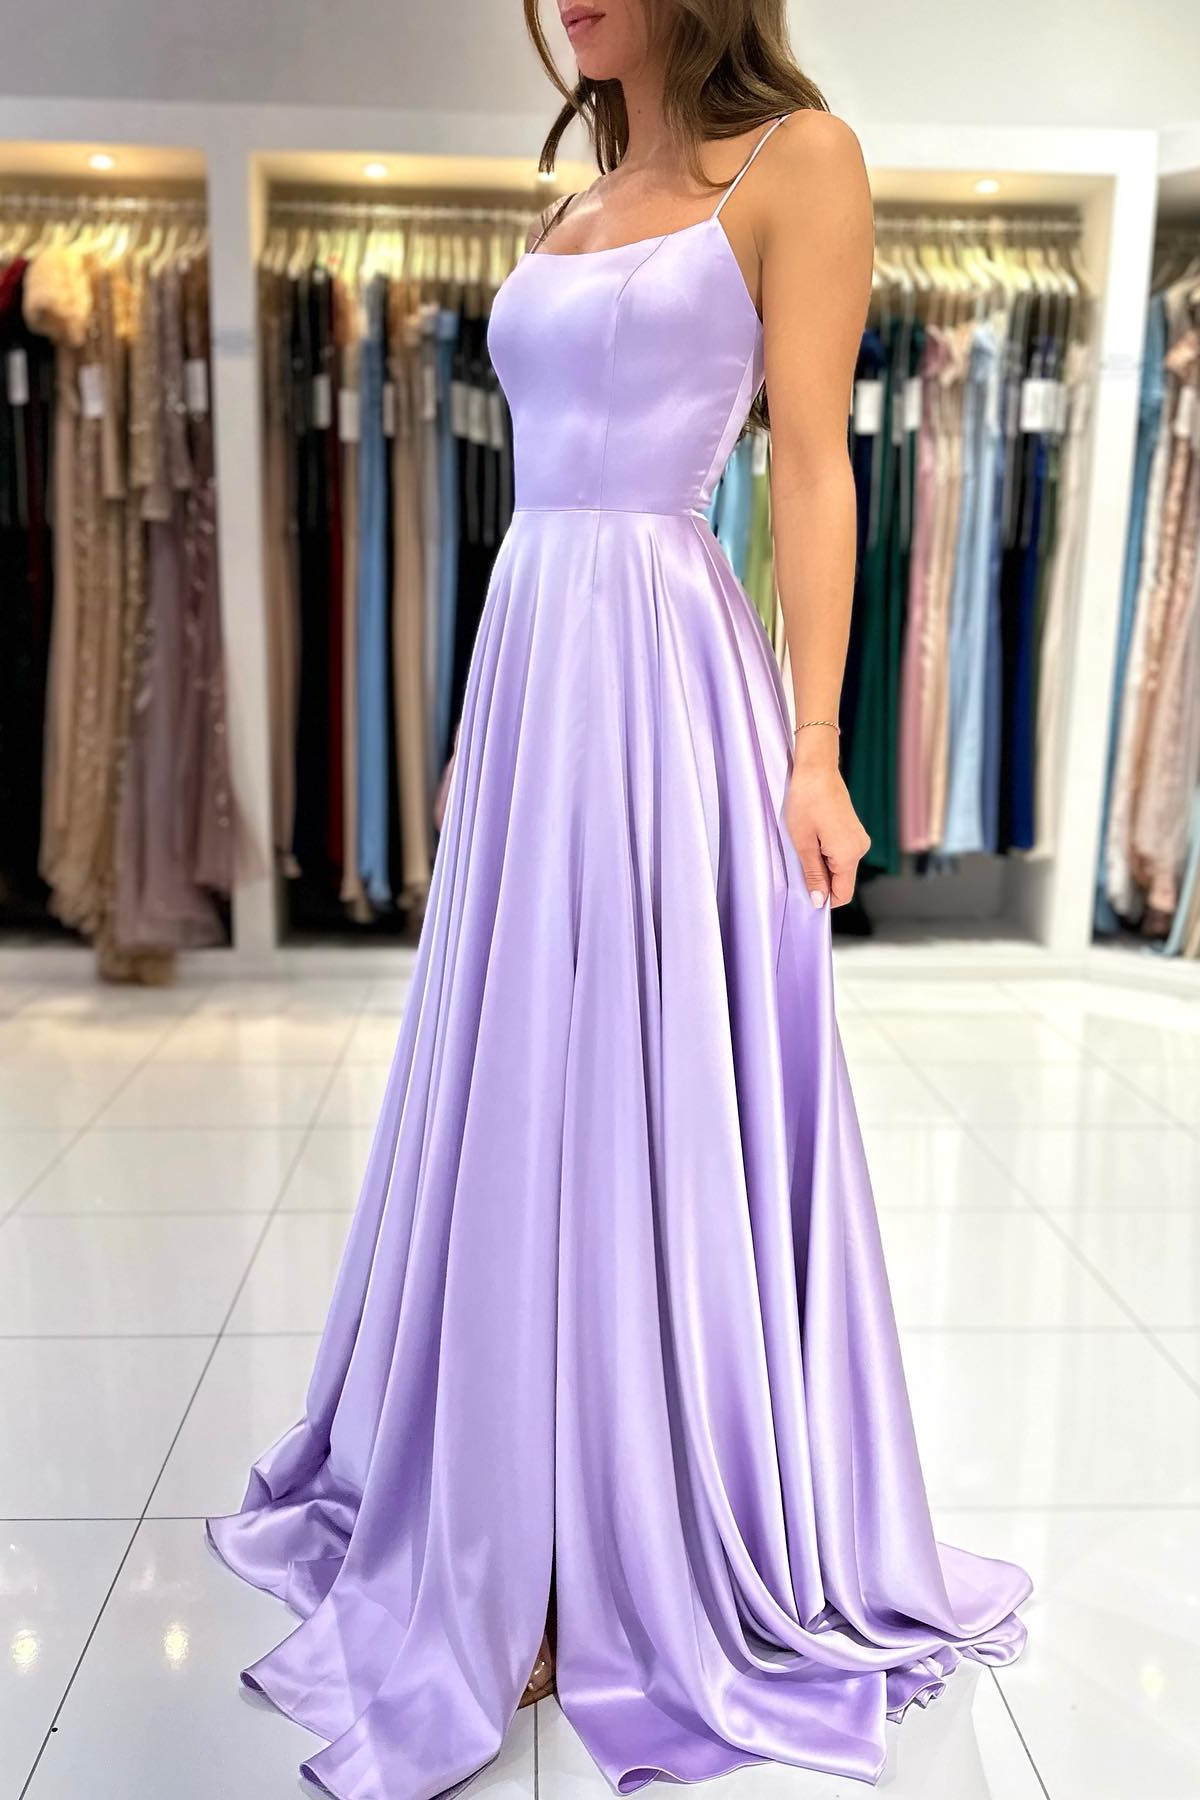 Dresseswow Lilac Spaghetti-Straps A-line Prom Dress Sleeveless On Sale